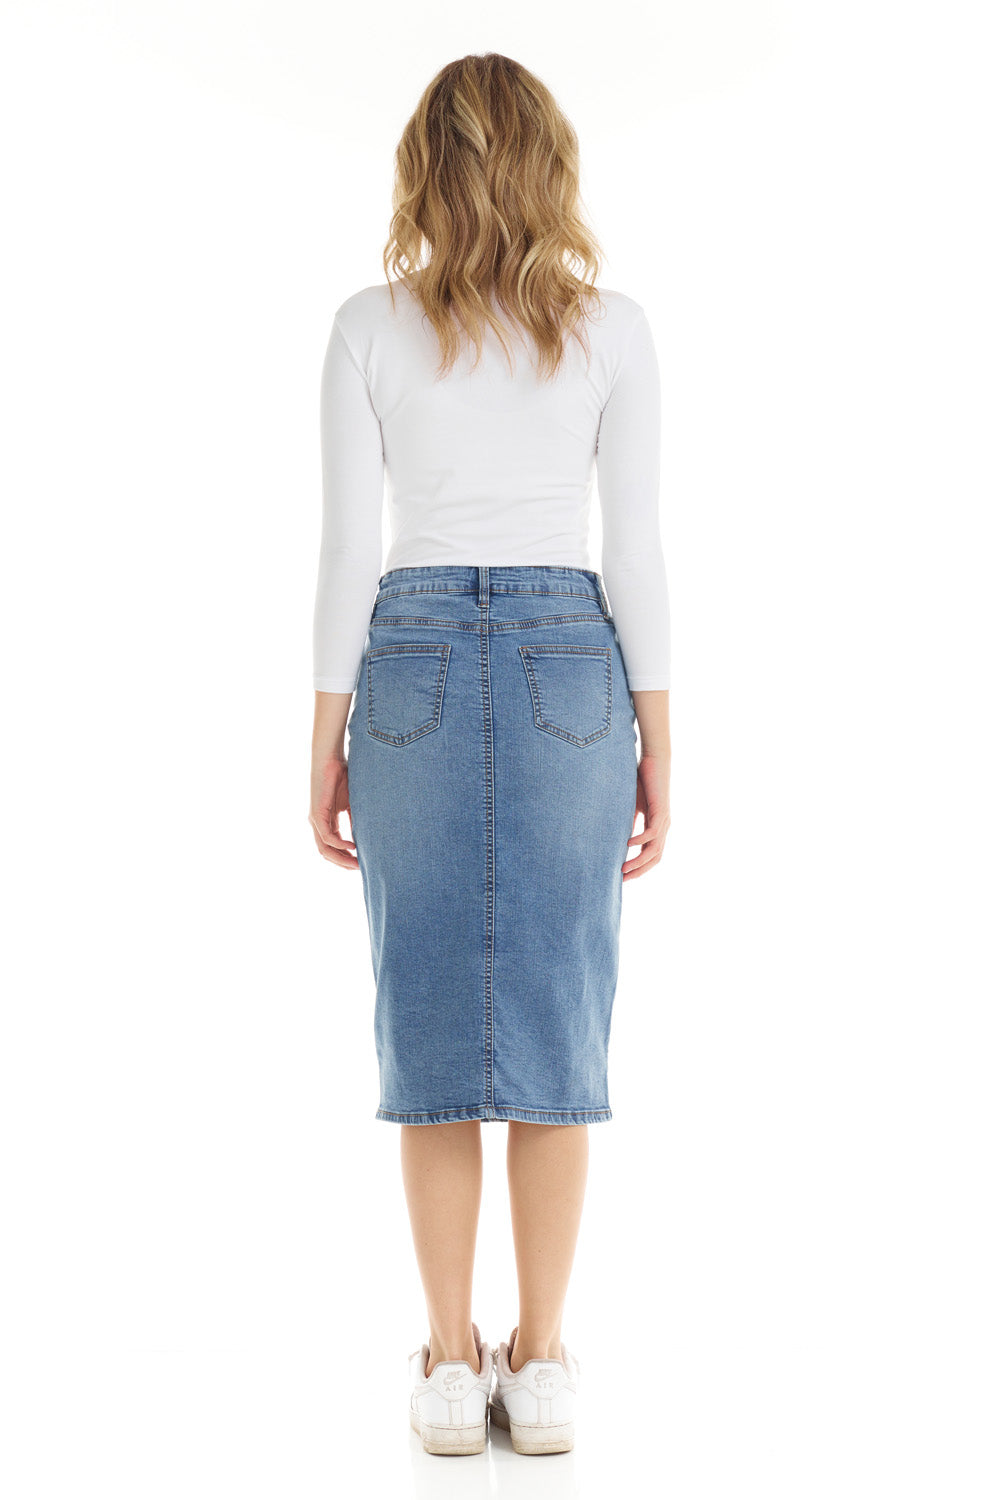 Esteez MILAN Denim Skirt - Midi Below Knee Length Two-Tone Jean Skirt for WOMEN